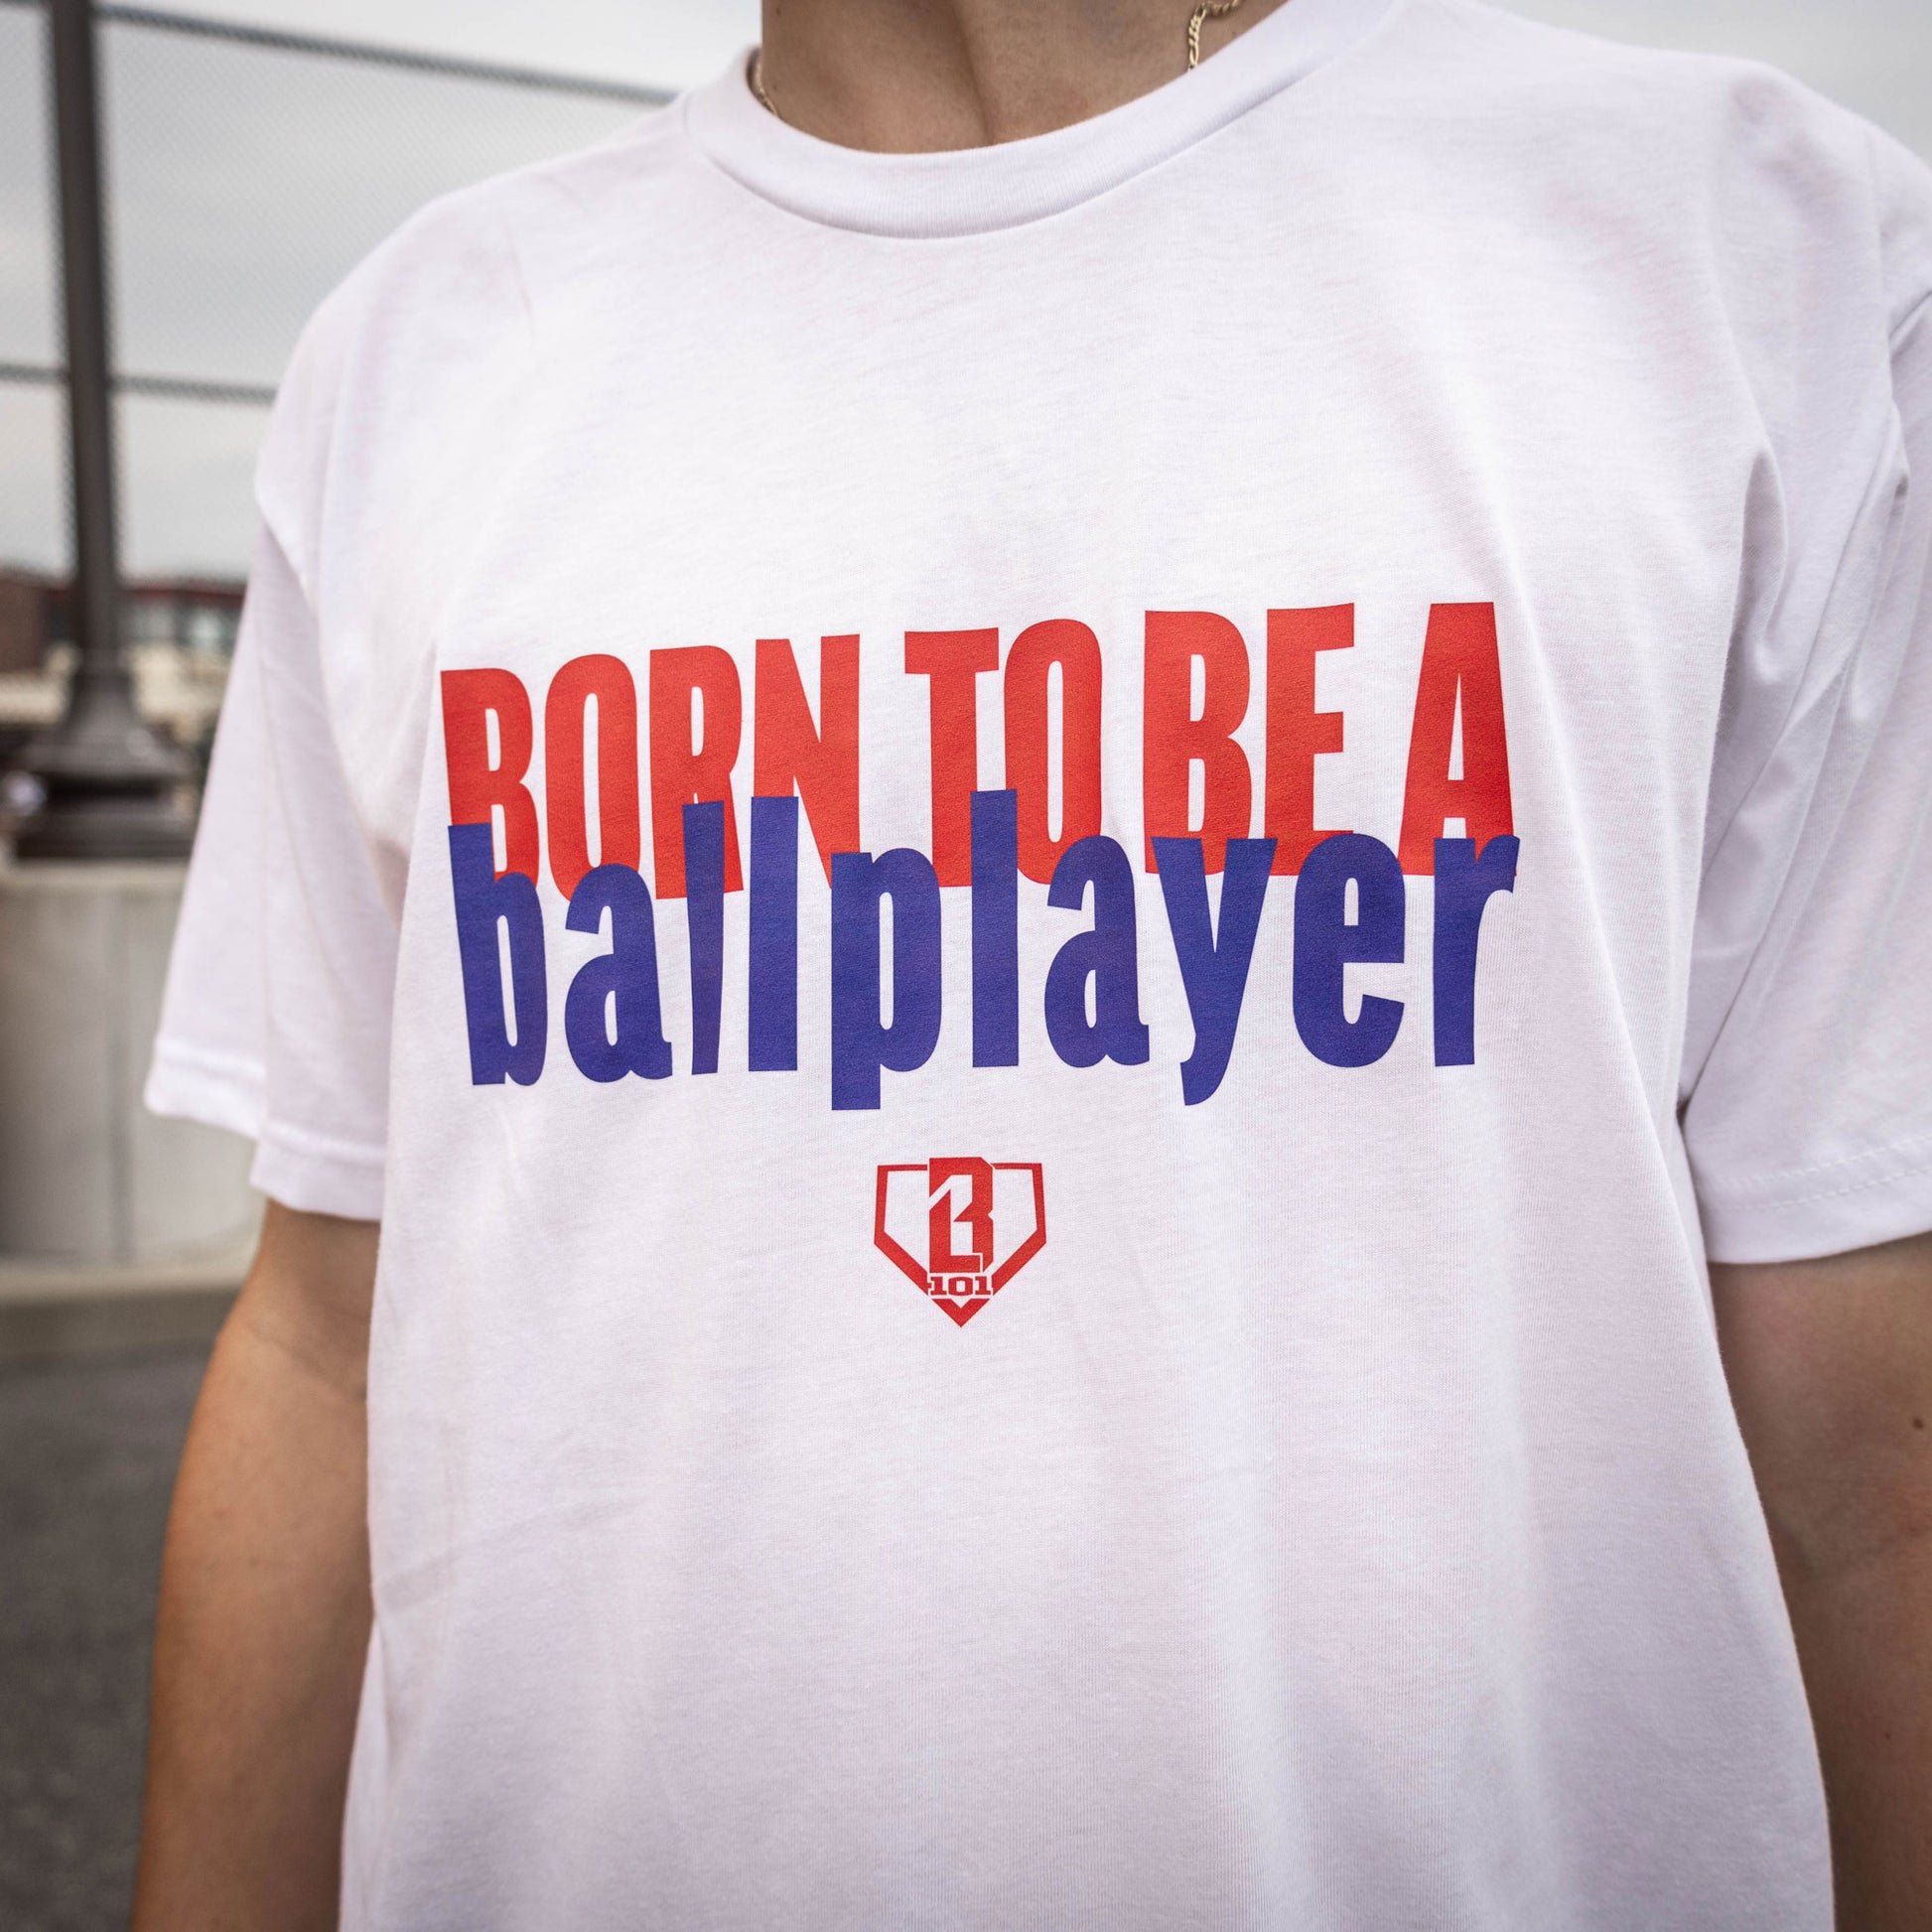 born to be a ballplayer, white baseball tshirt